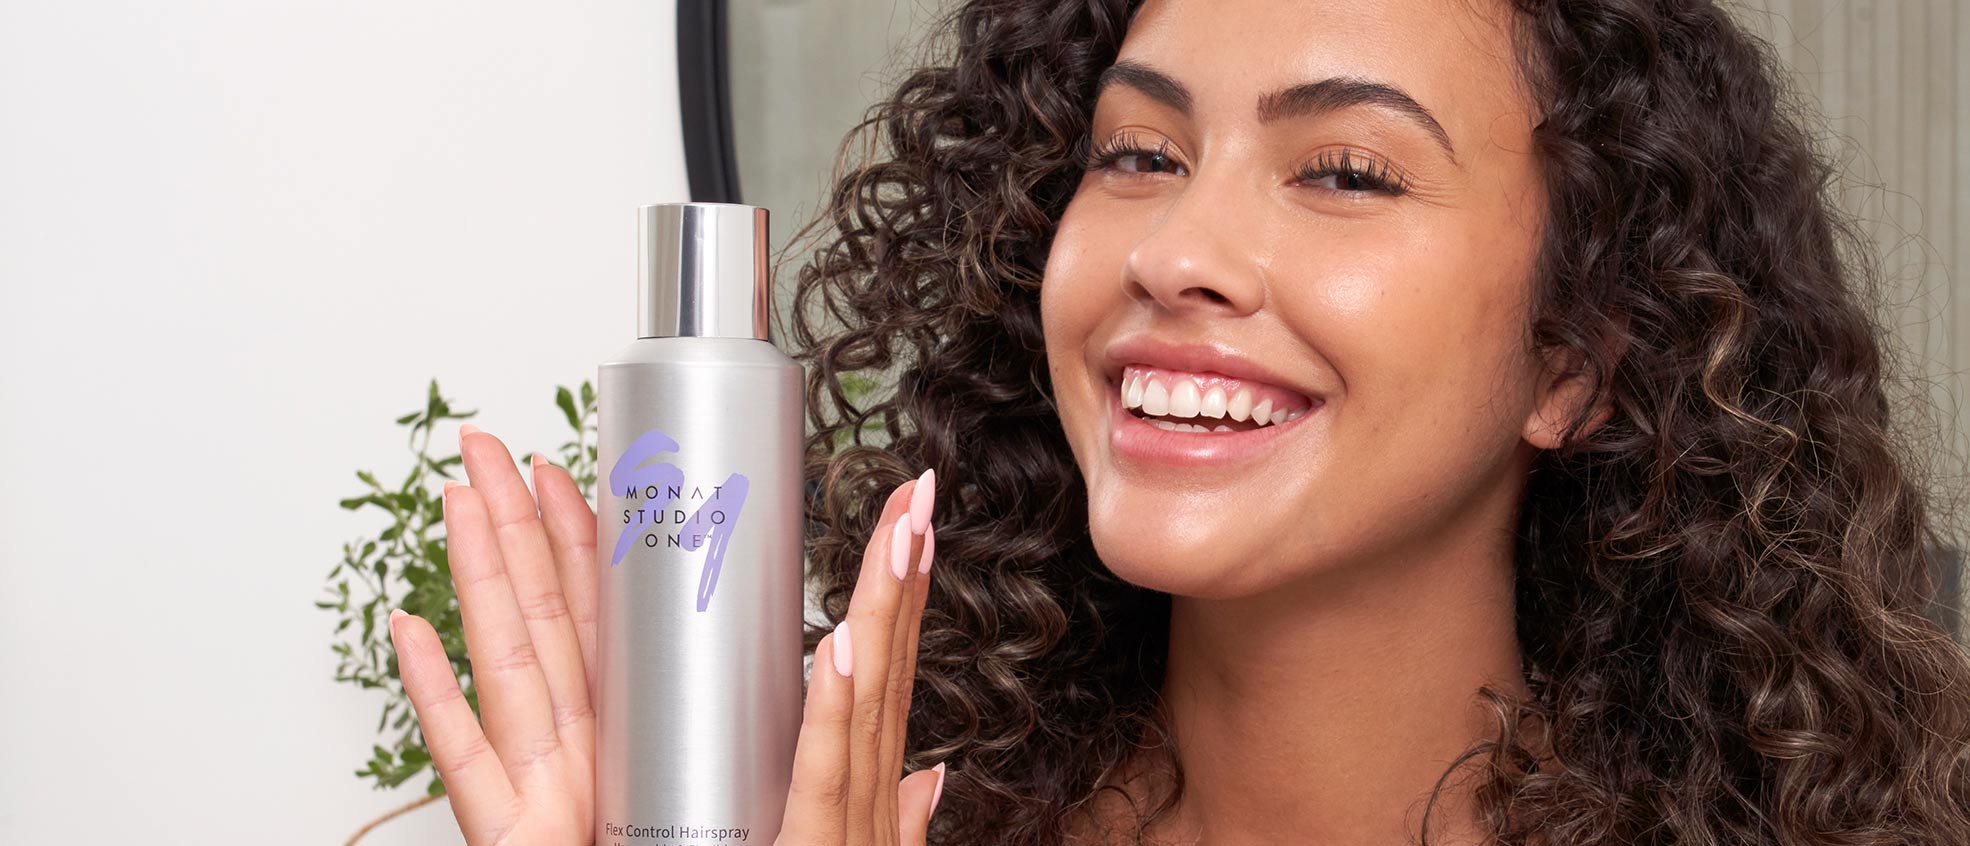 	Brunette female smiling while holding MONAT STUDIO ONE™ Flex Control Hairspray.